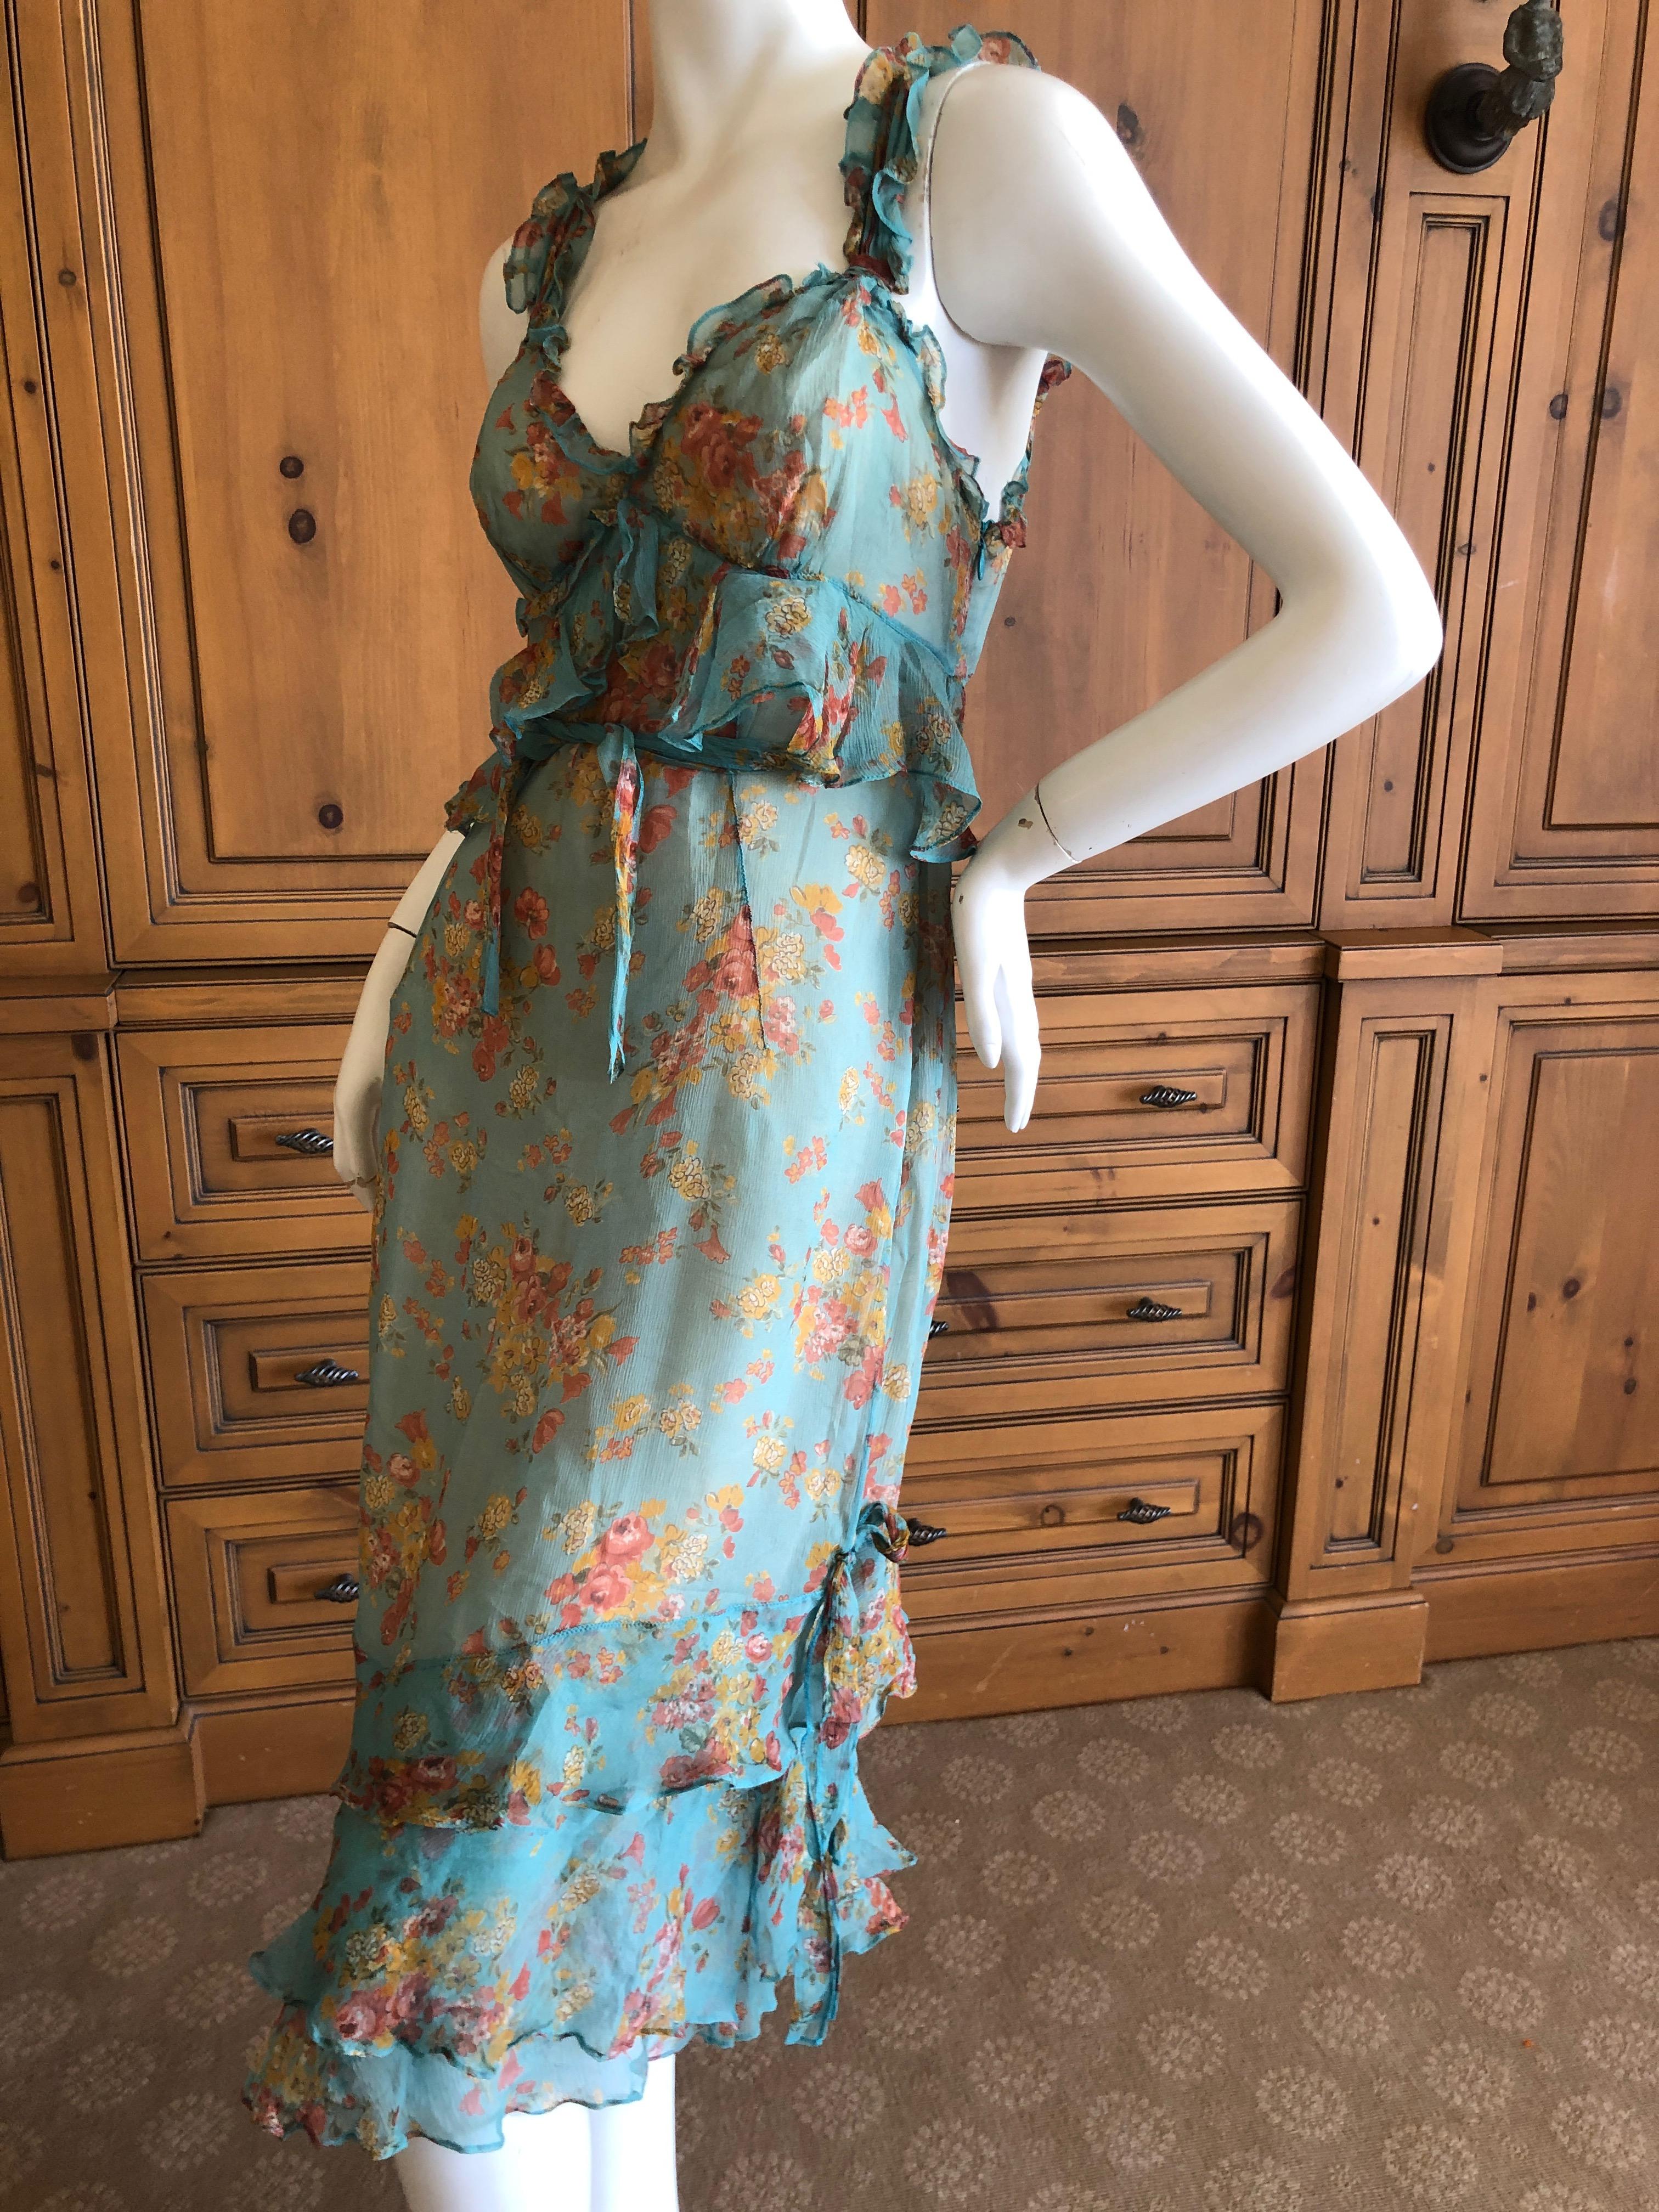 D&G Dolce & Gabbana Romantic Vintage Ruffled Silk Chiffon Floral Dress
Please check measurements, Marked size 44
Bust 38'
Waist 32